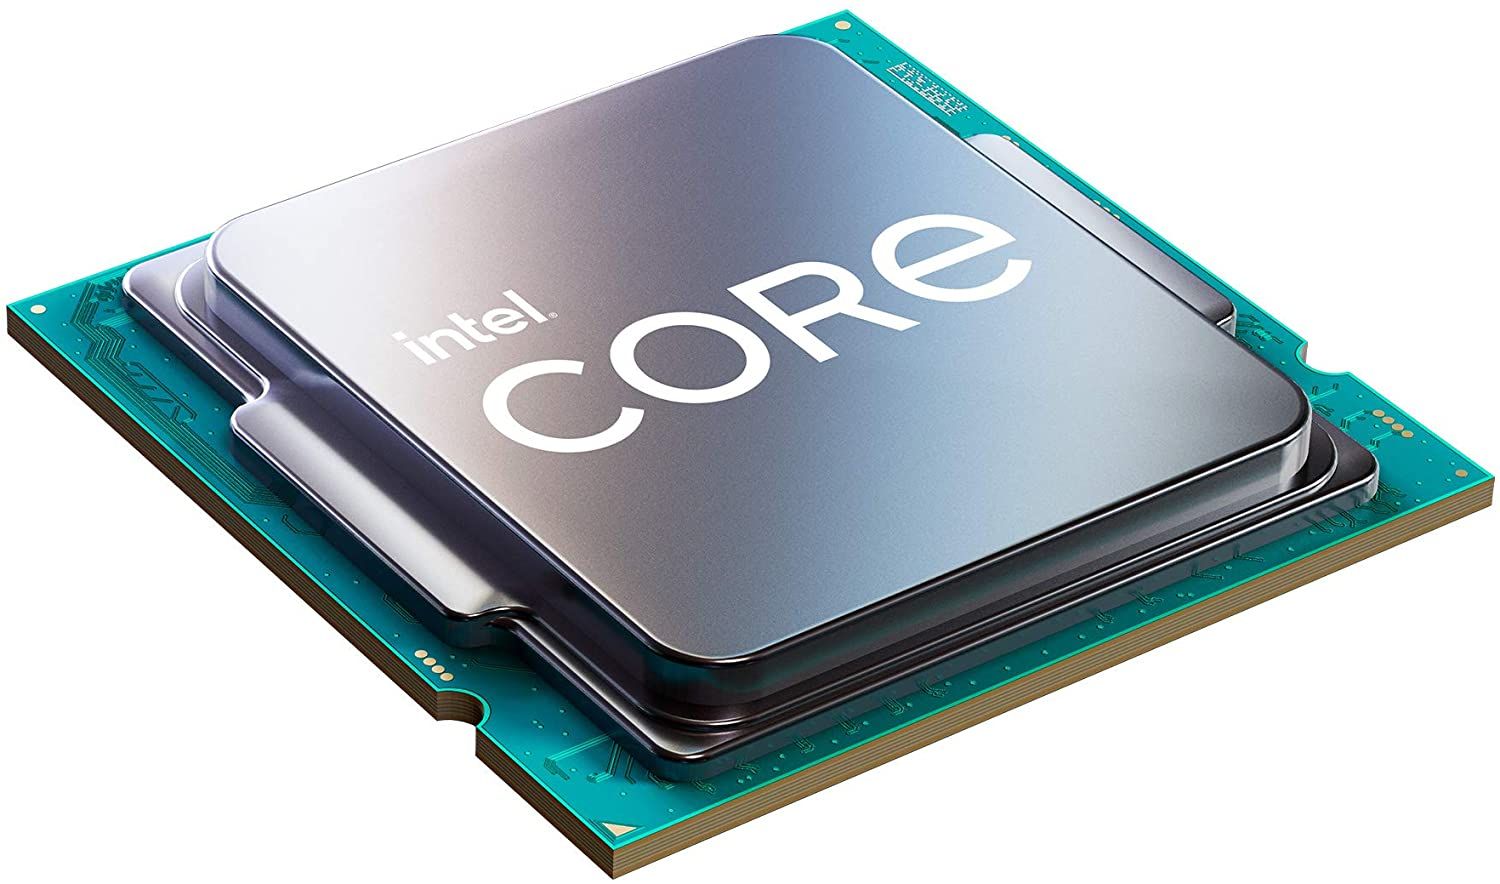 Intel Core i5-11400 chip